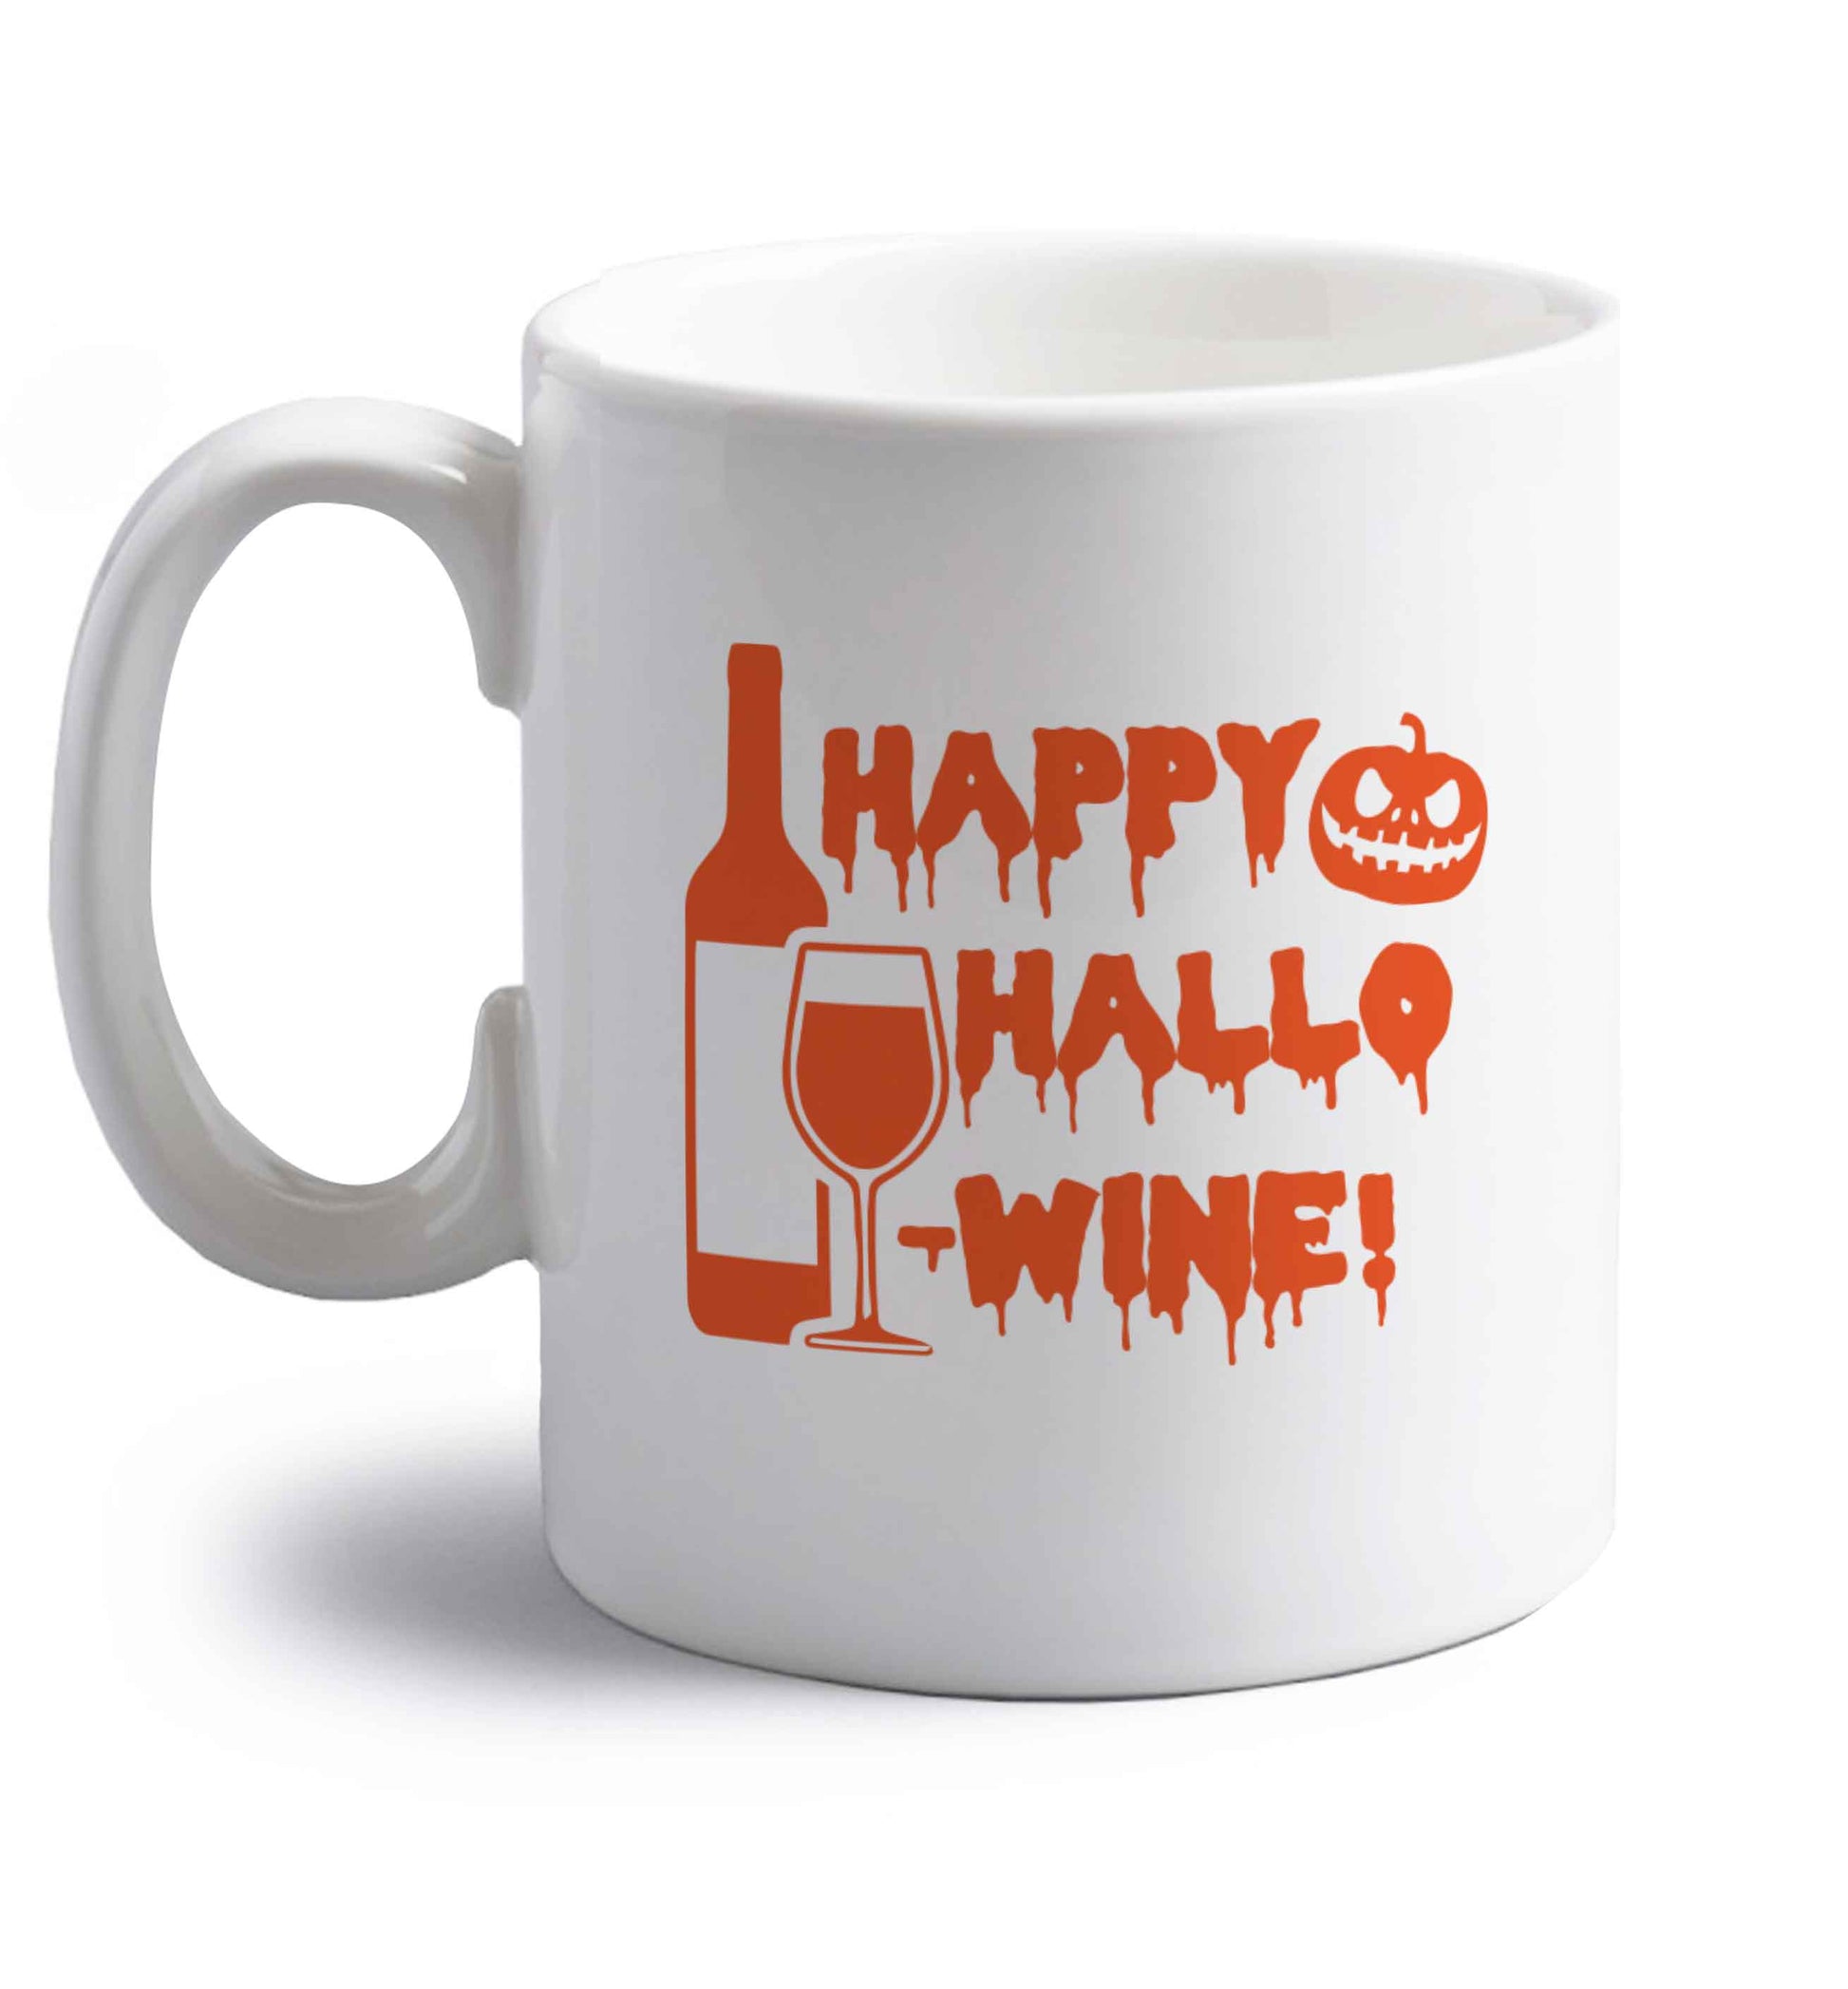 Happy hallow-wine right handed white ceramic mug 